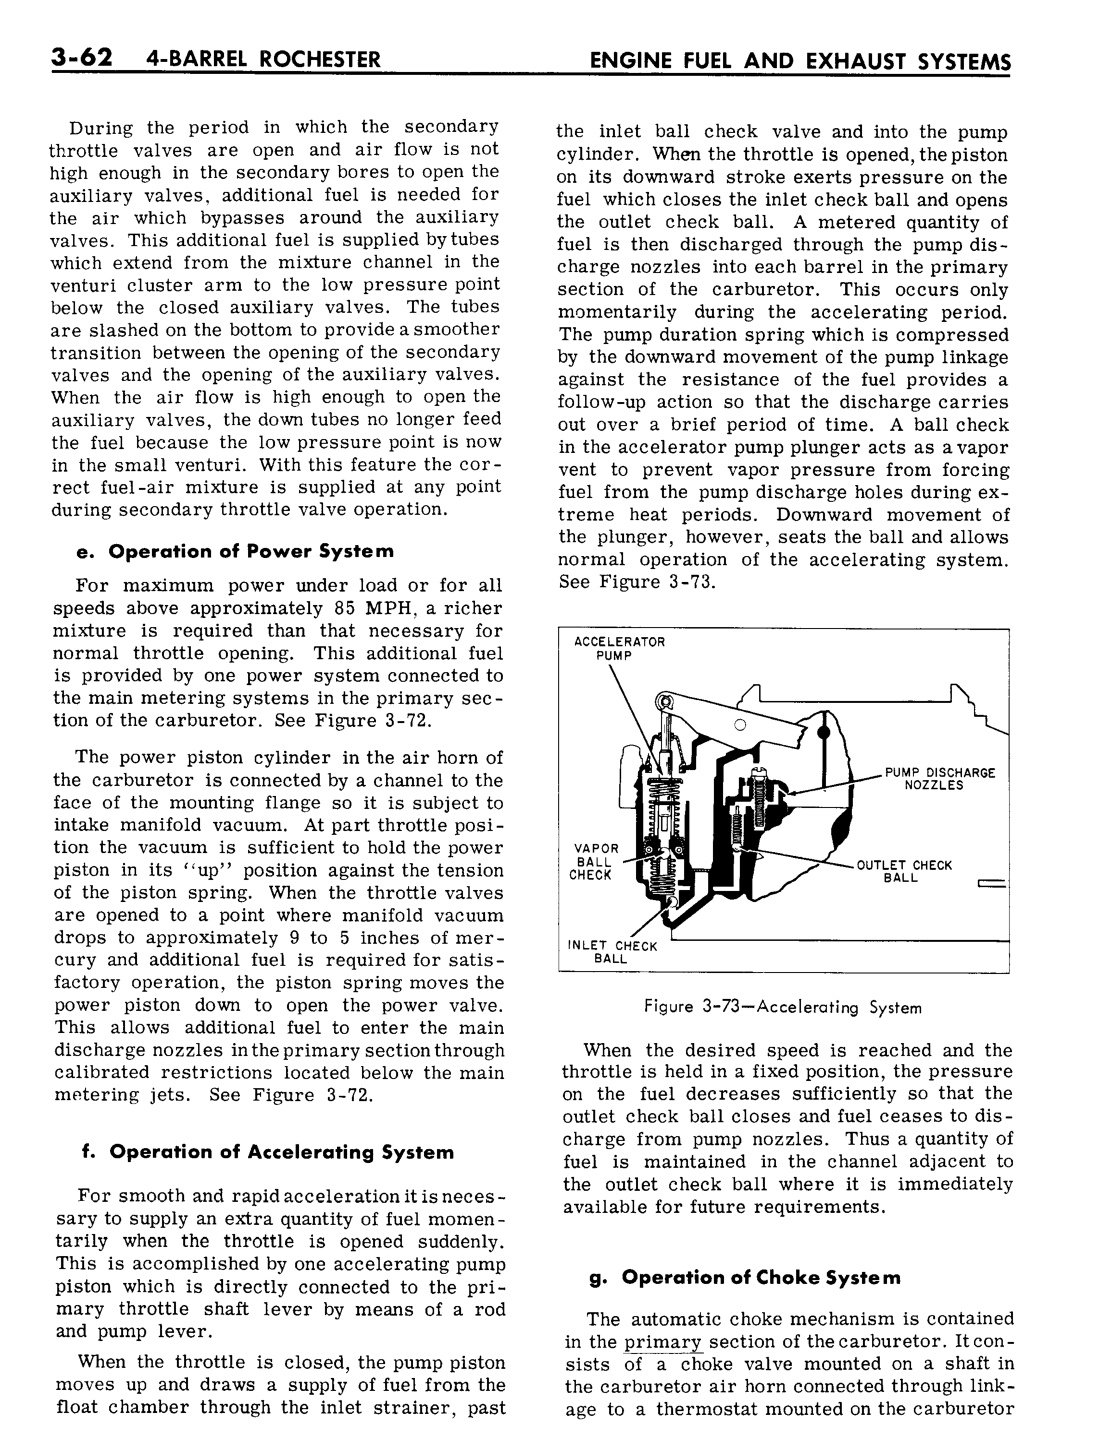 n_04 1961 Buick Shop Manual - Engine Fuel & Exhaust-062-062.jpg